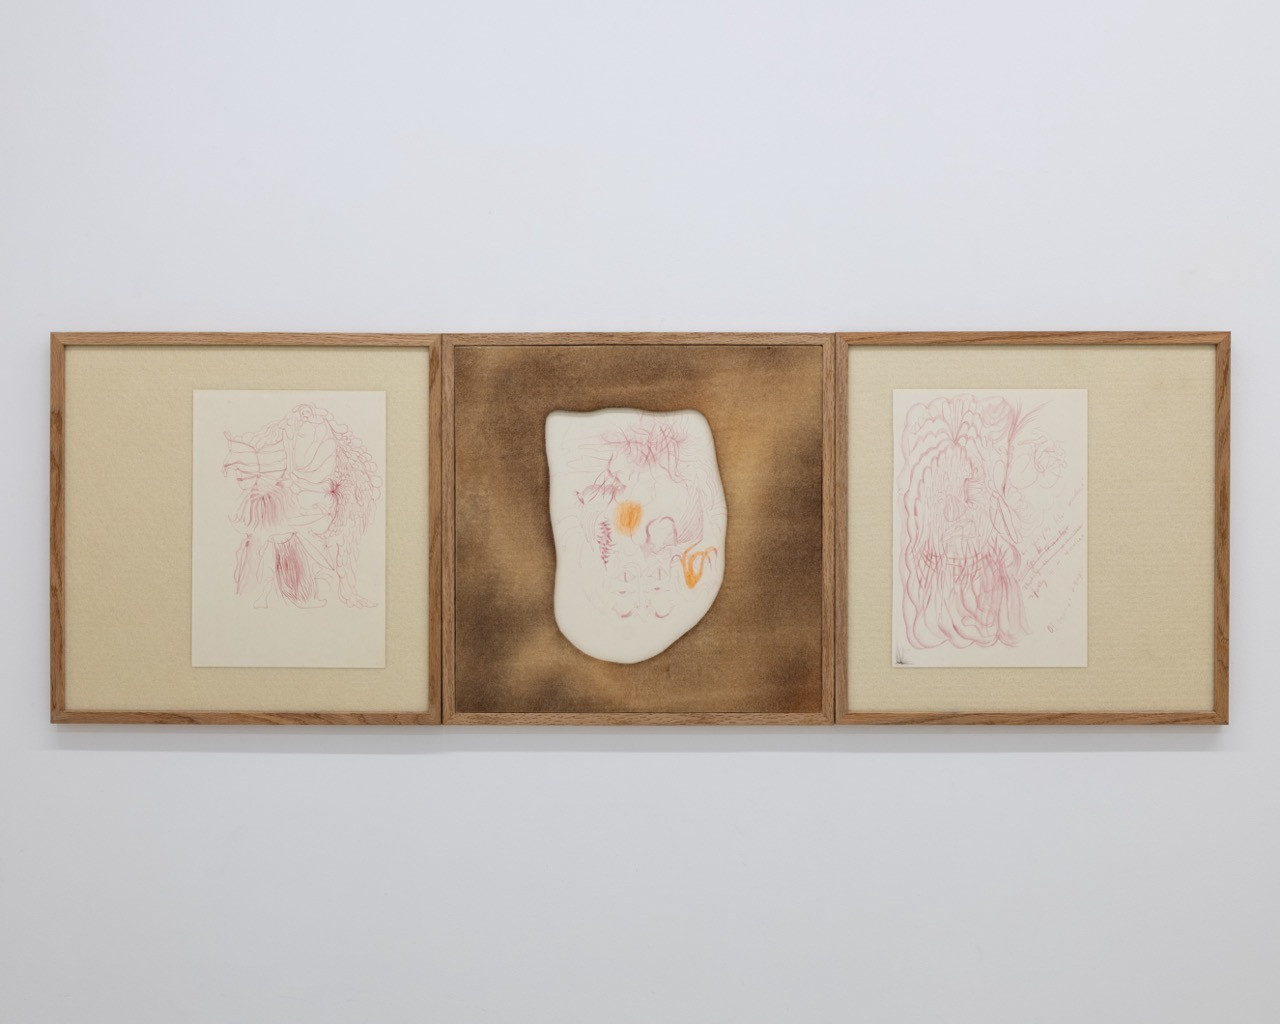 Marta NiedbaÅ‚, from the left: "Leaky", "Wormy", "Drowsy", 2022, crayon on paper, framed in UV glass in an oak frame, 41 x 41 cm, photo by Szymon SokoÅ‚owski